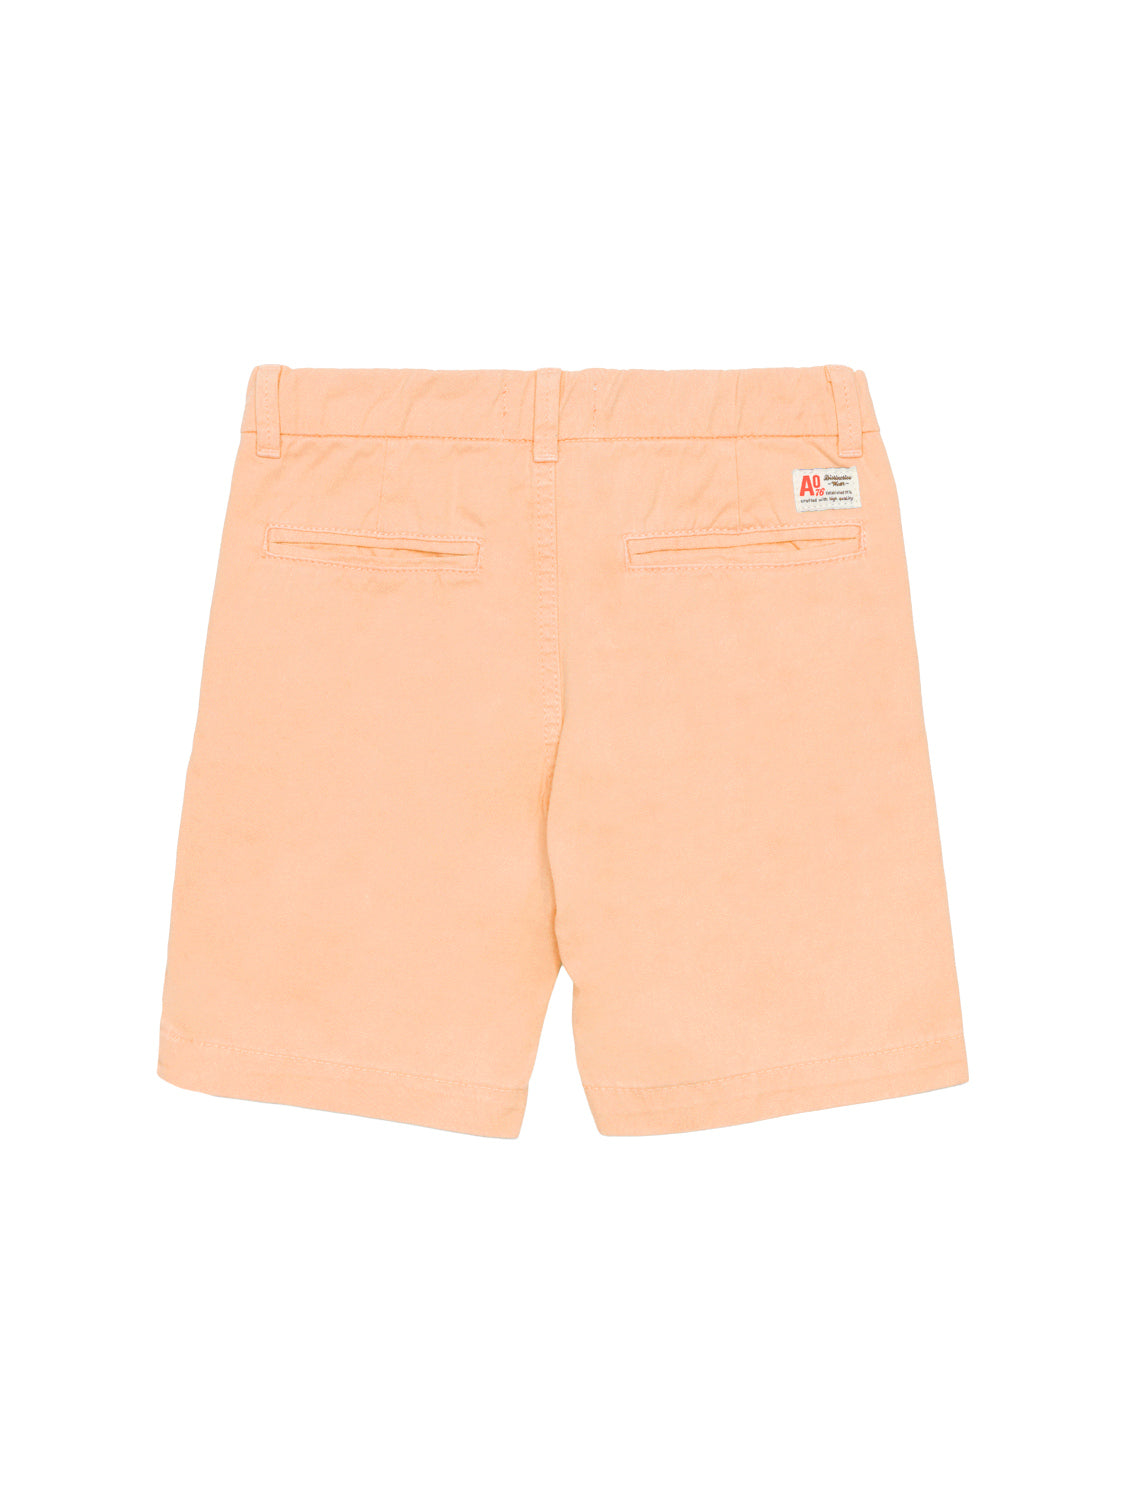 Barry Chino Shorts - Peach